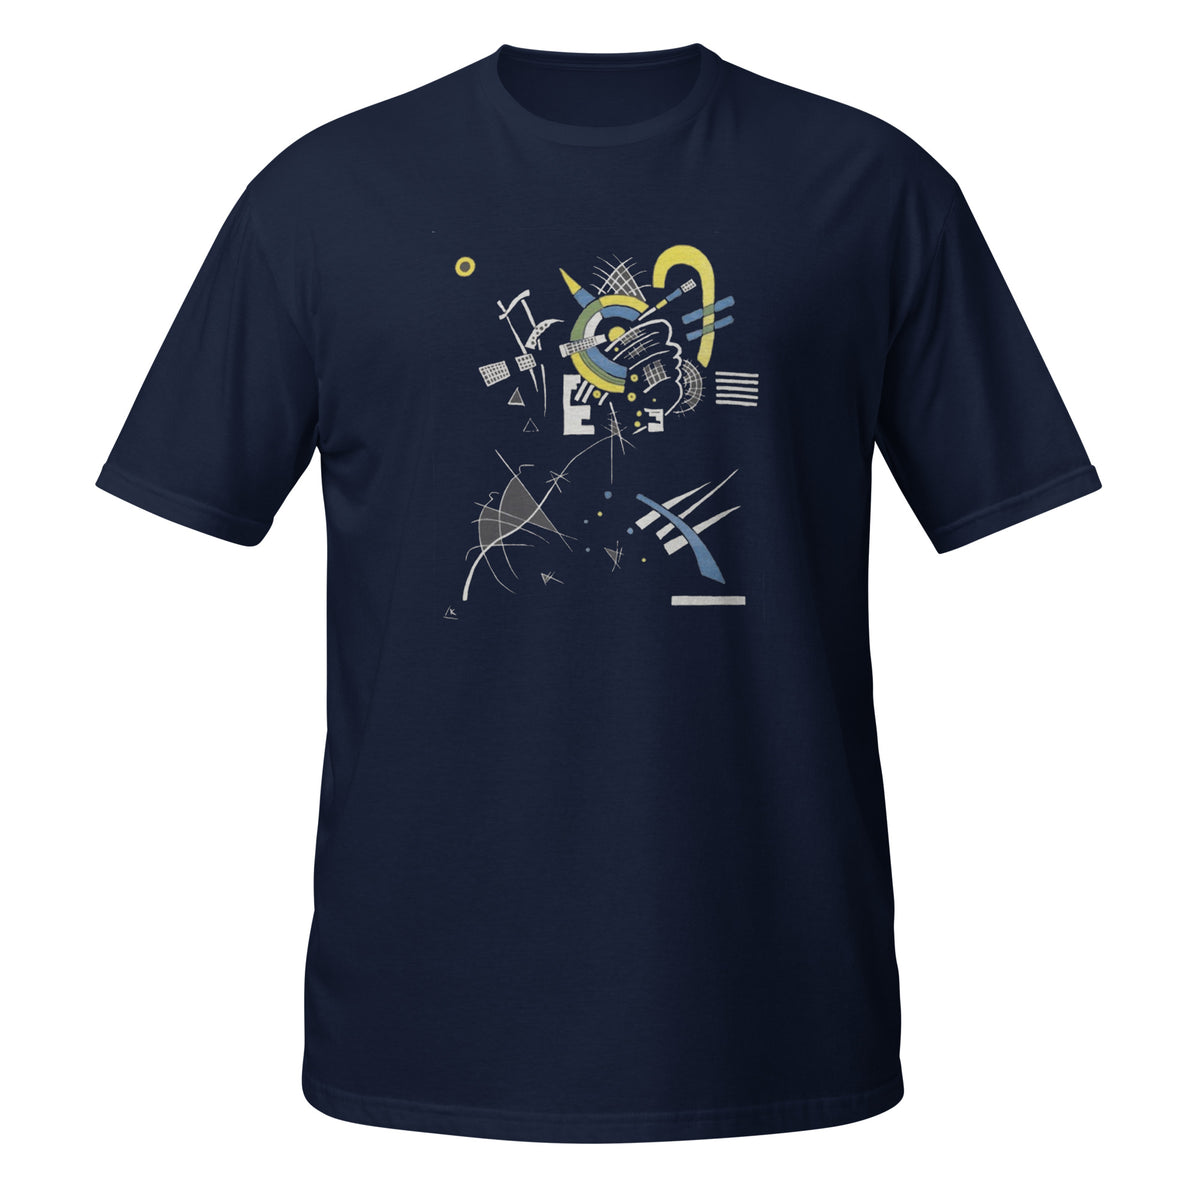 Abstract Kleine Welten (Small Worlds ) T-Shirt